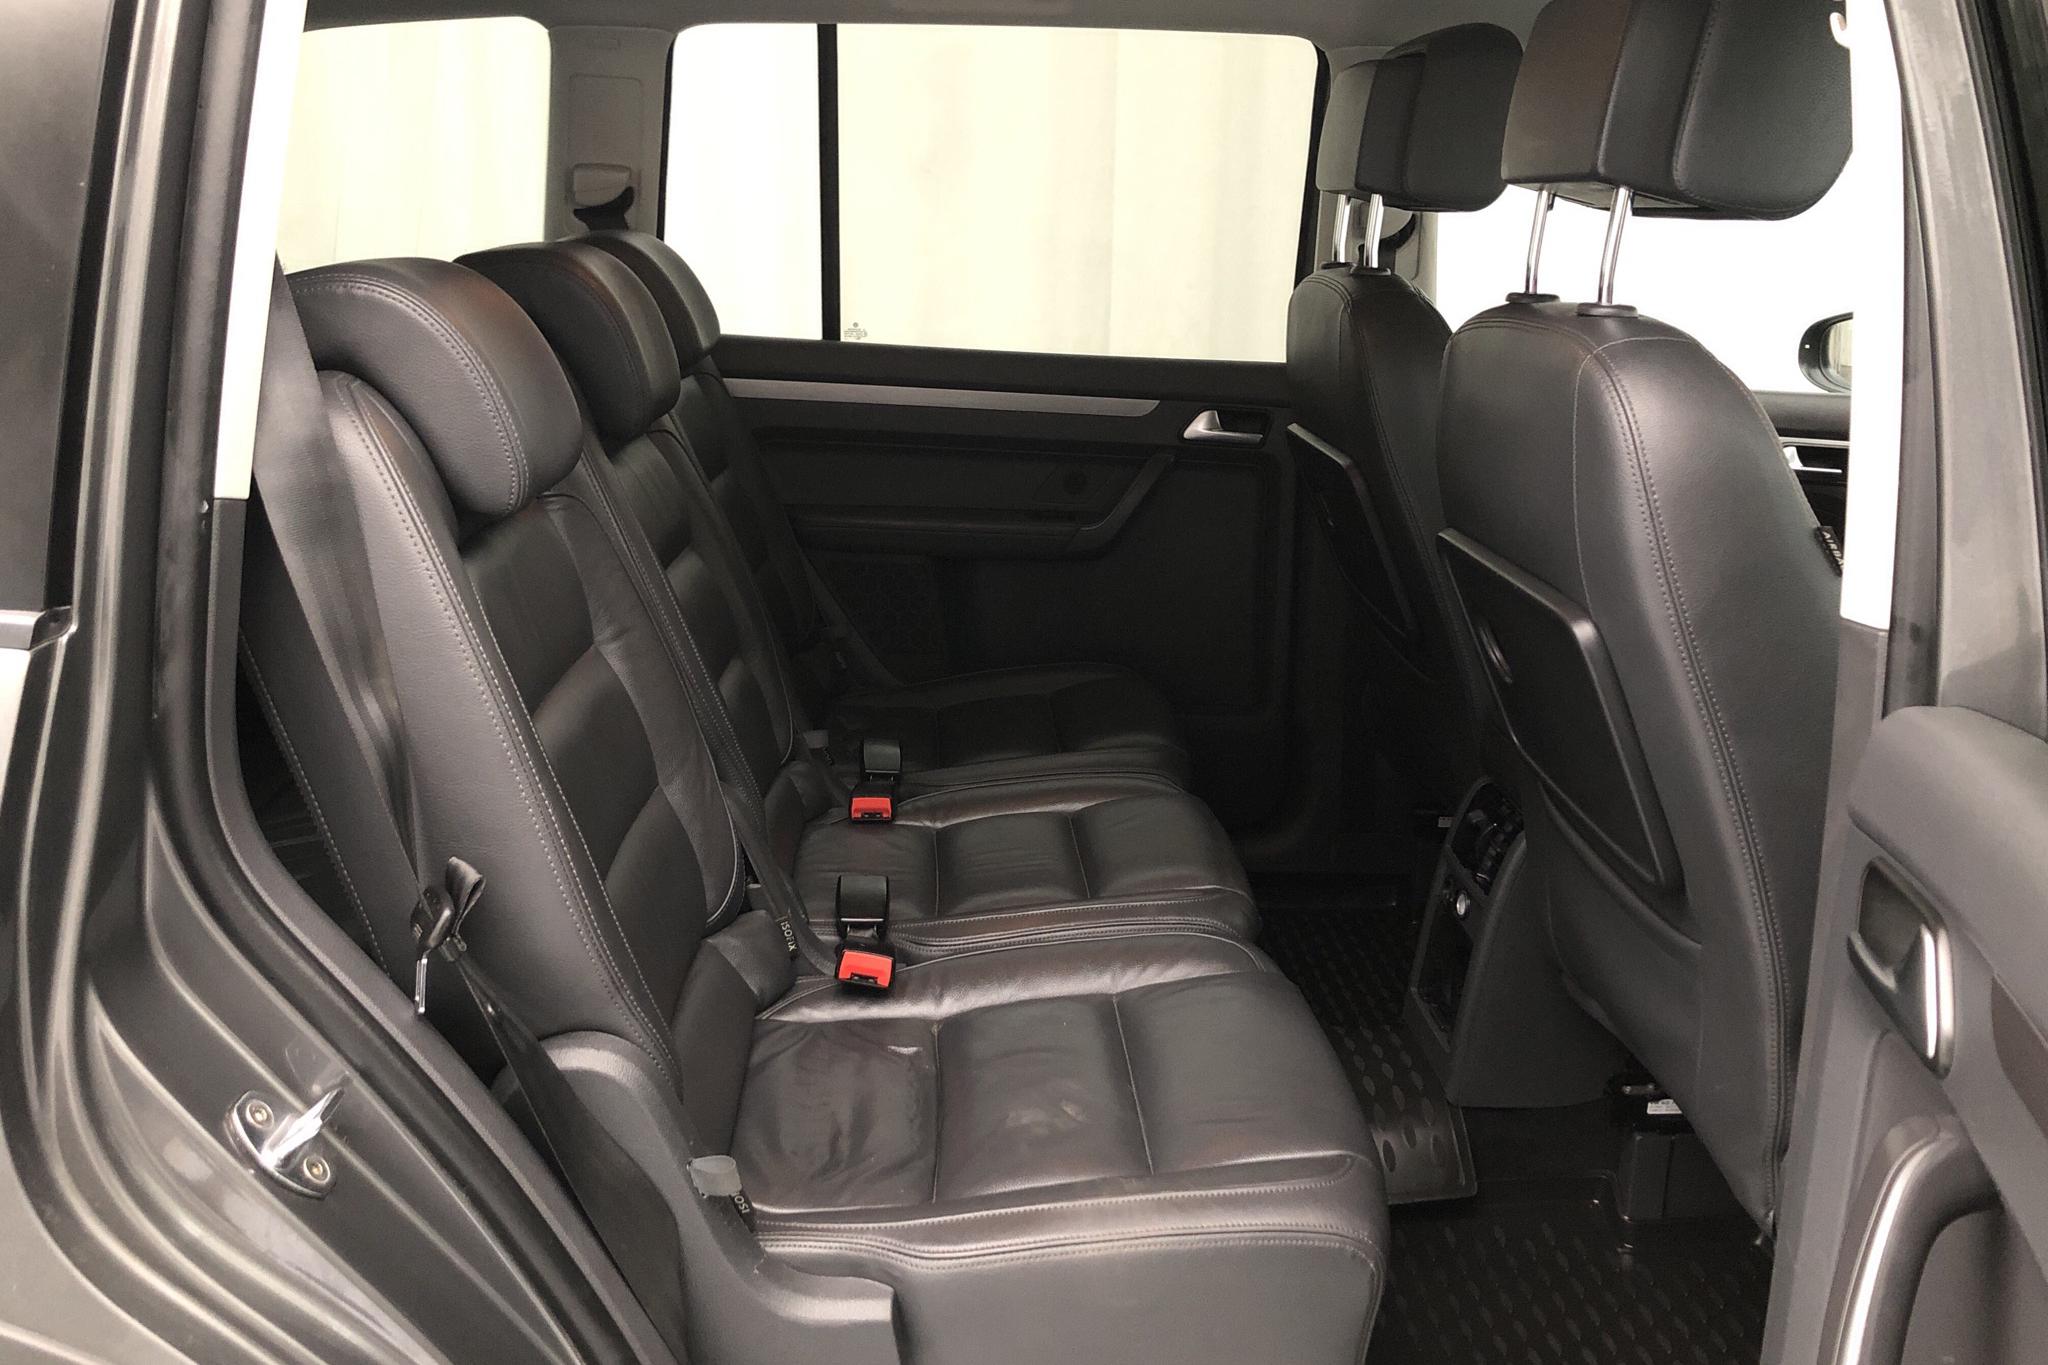 VW CrossTouran 1.4 TSI (140hk) - 145 600 km - Manual - Dark Grey - 2015